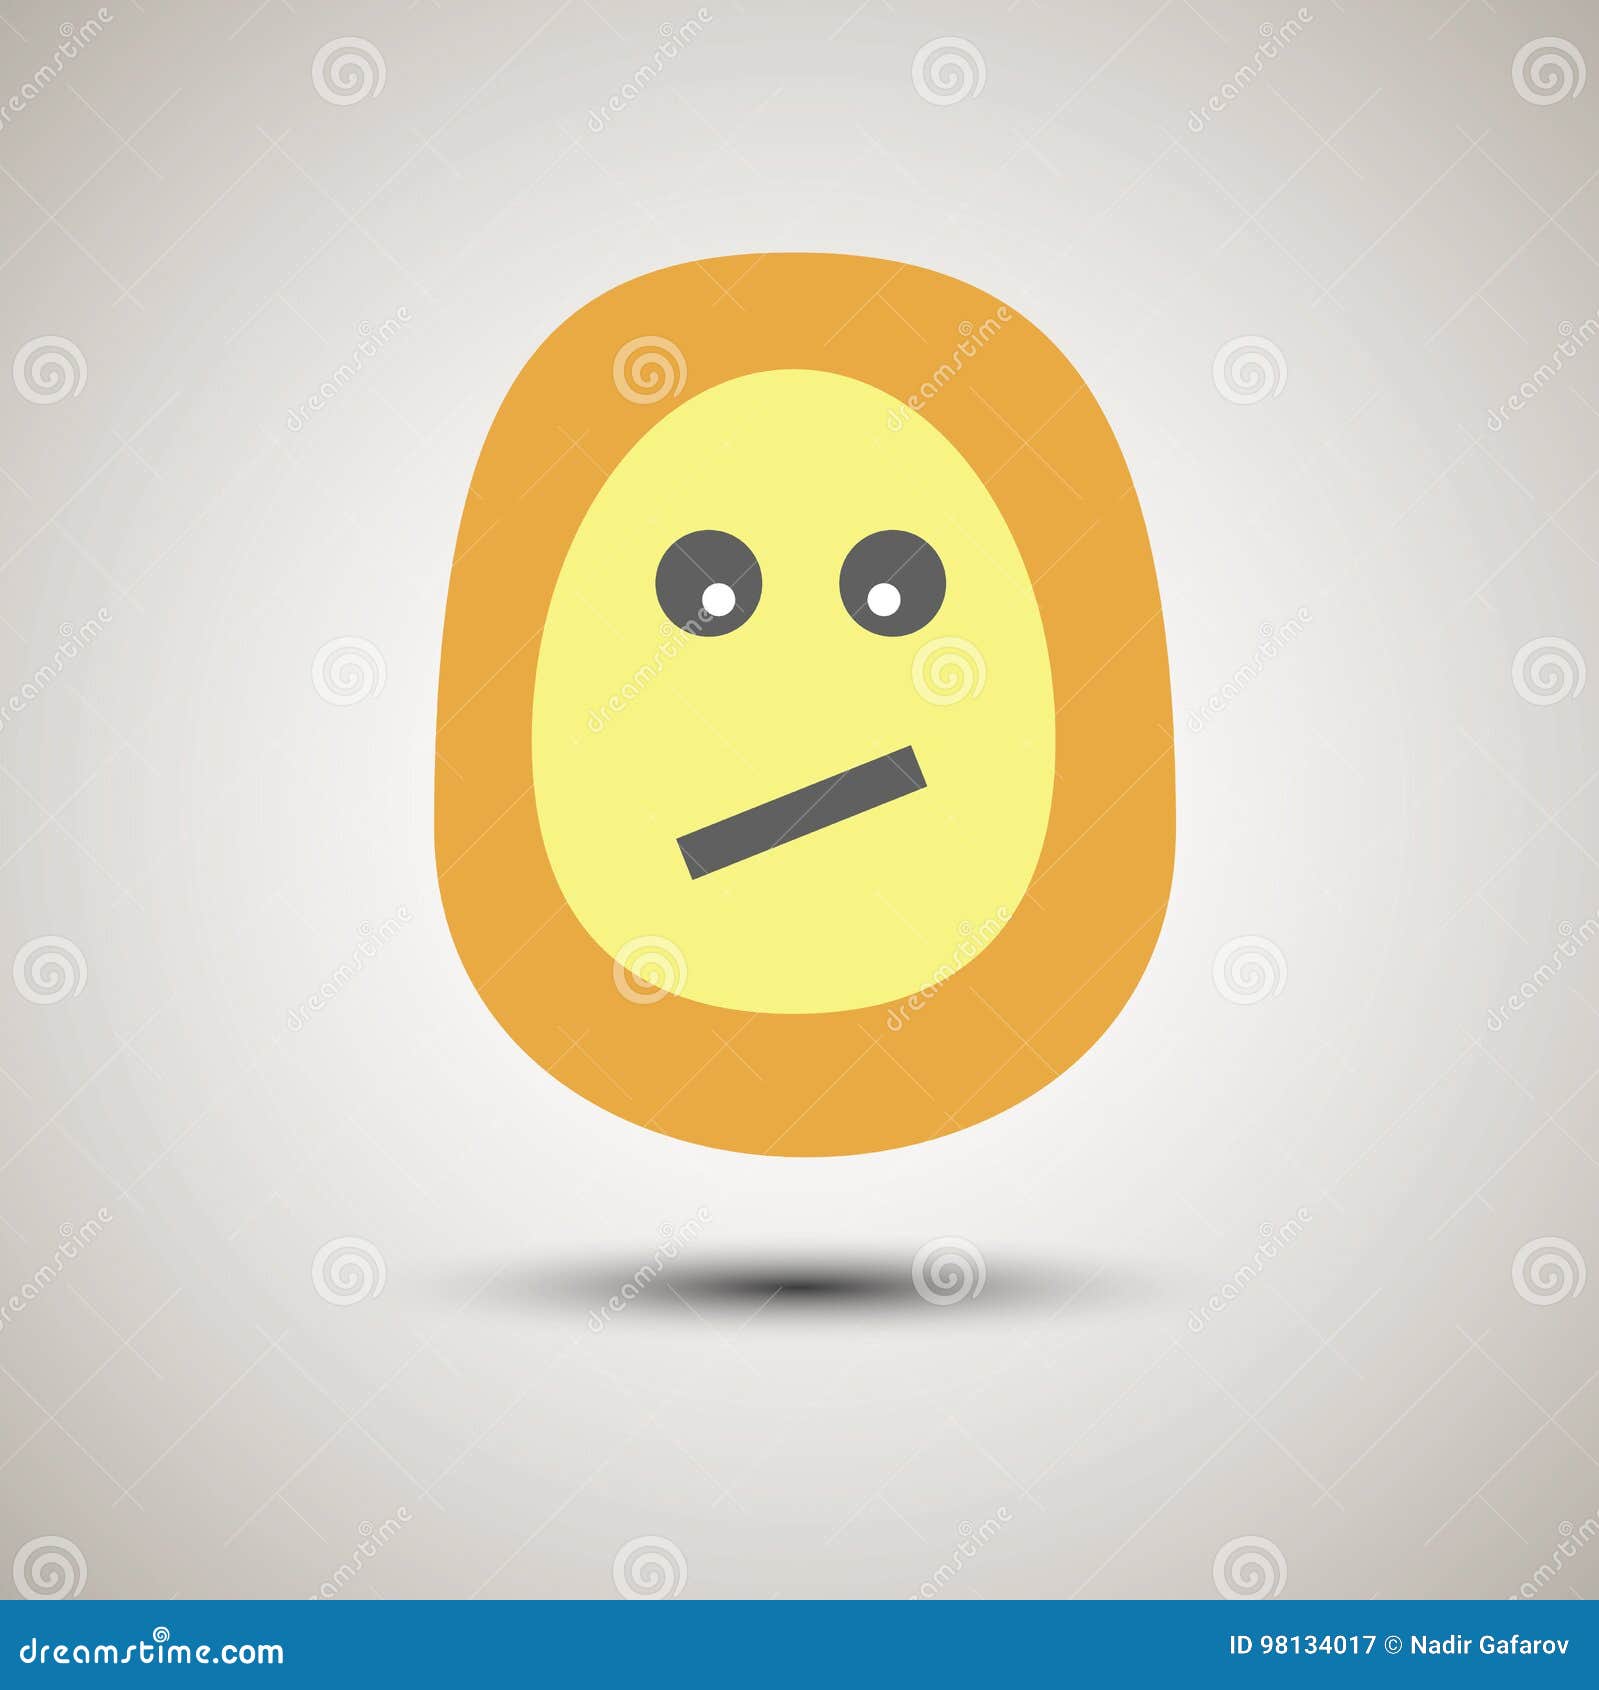 creative emoji smiley face unsure.